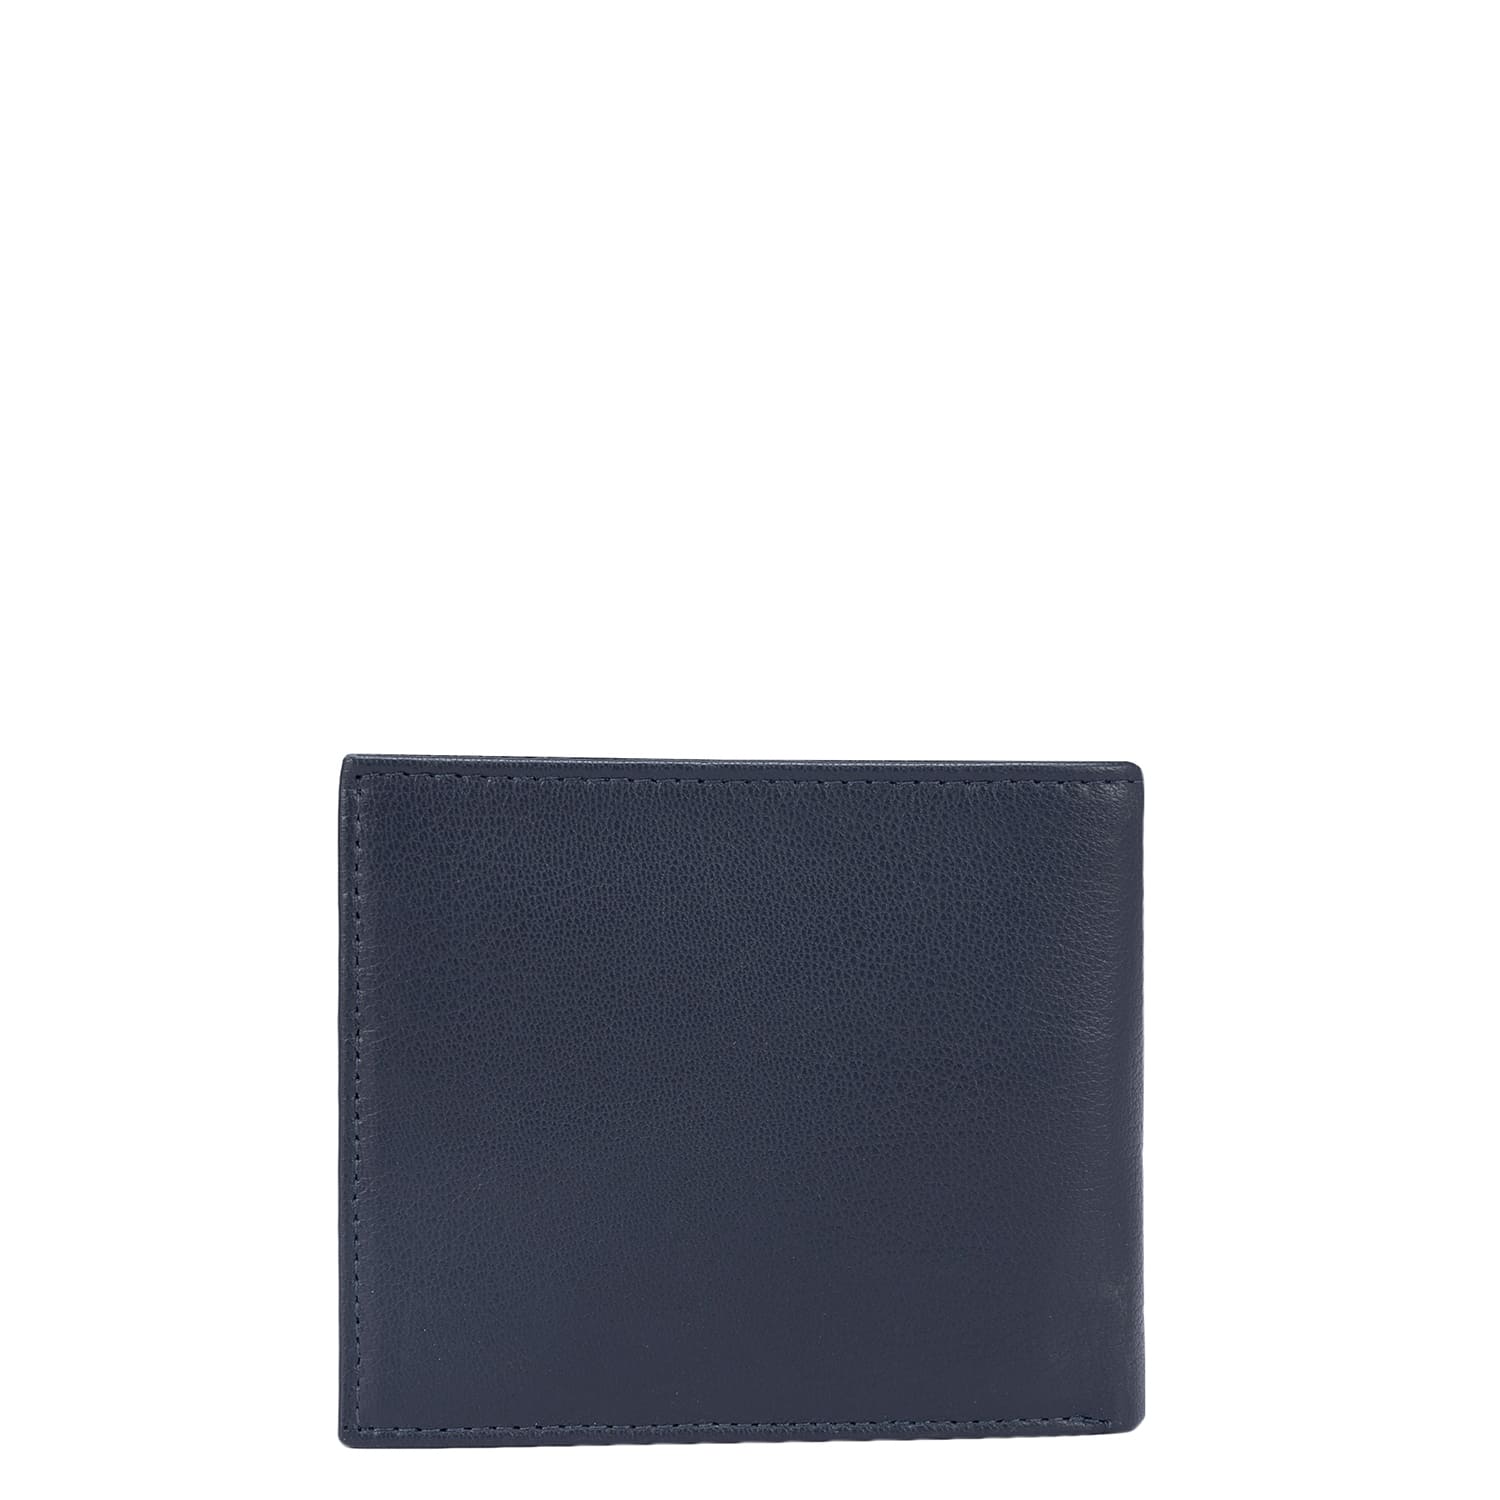 Buy/Send Porus Club Genuine Leather Wallet & Belt Combo Online- FNP